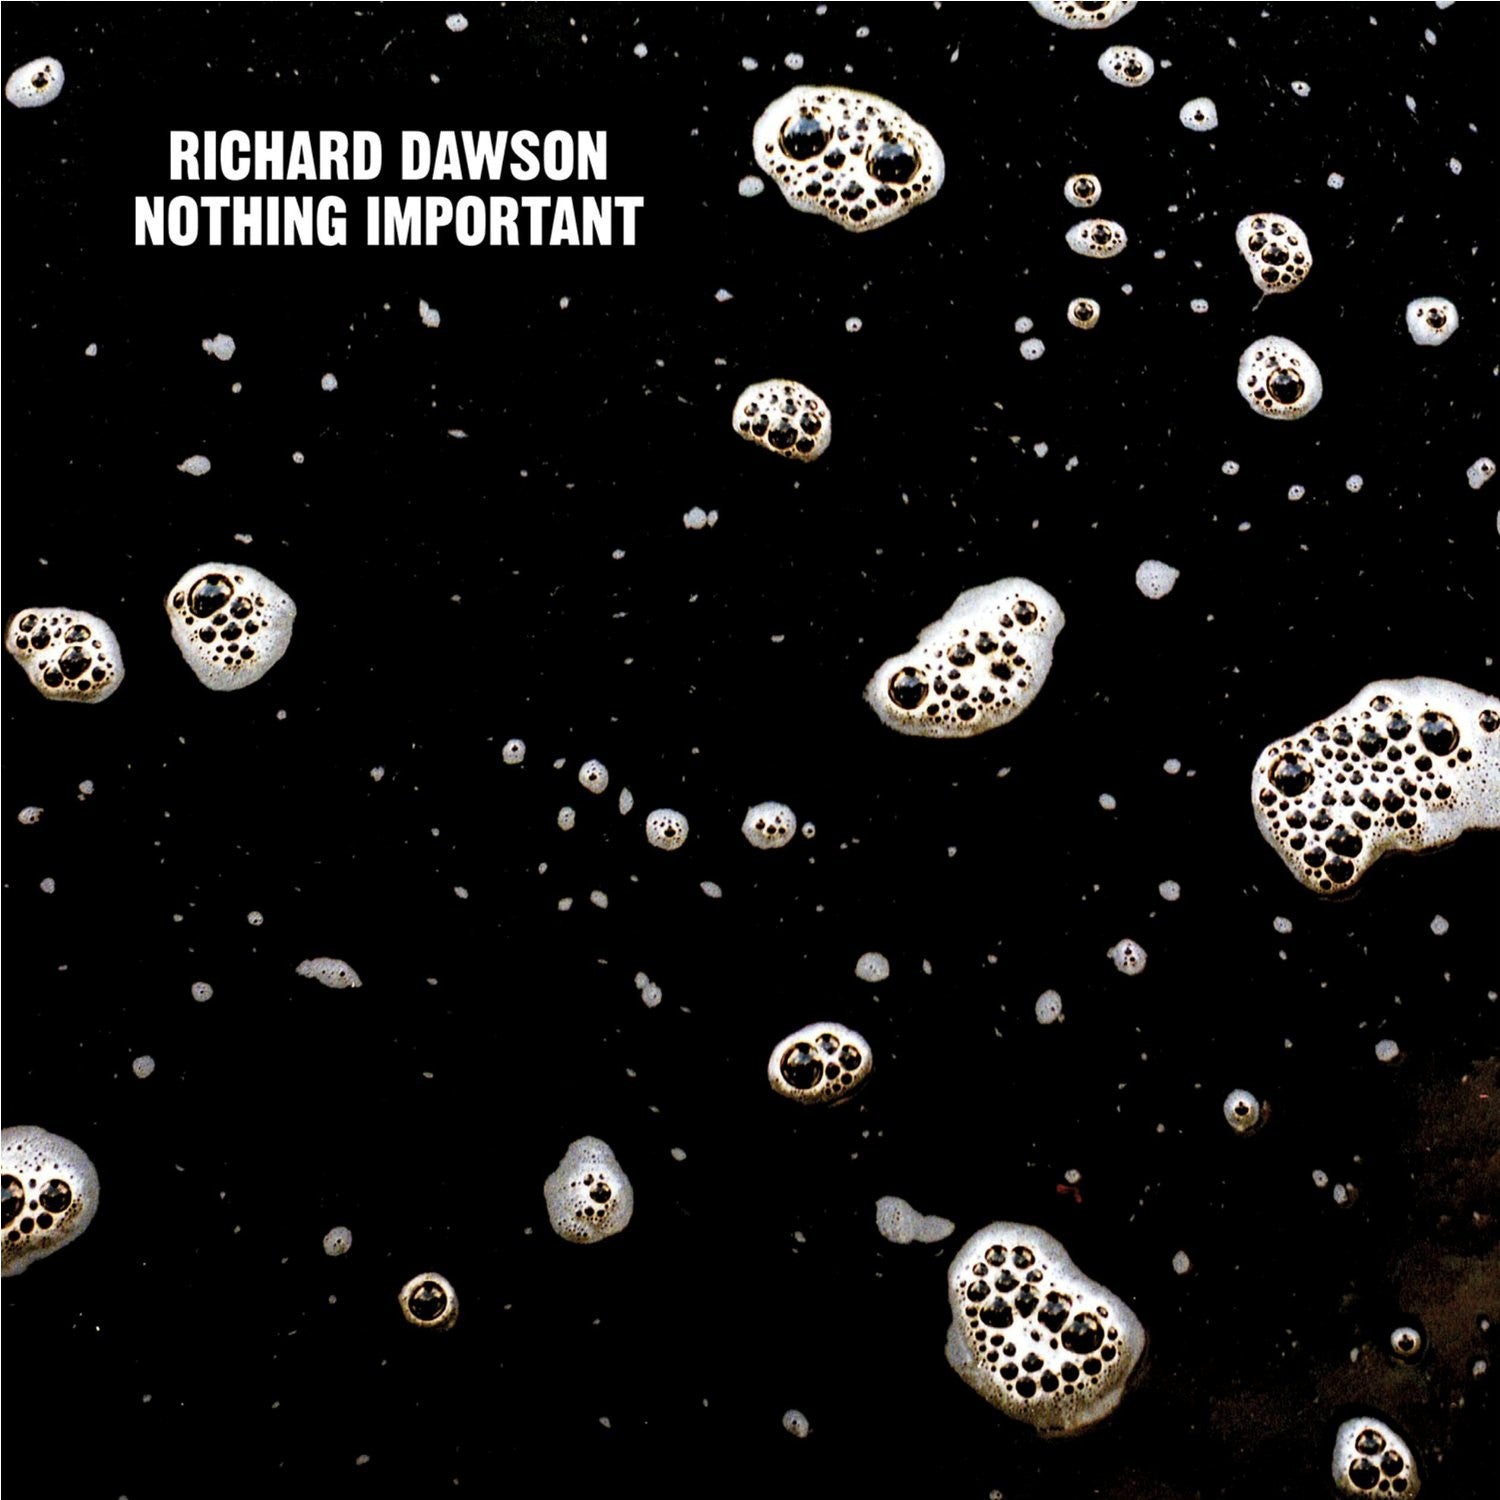 Richard Dawson - Nothing Important LP